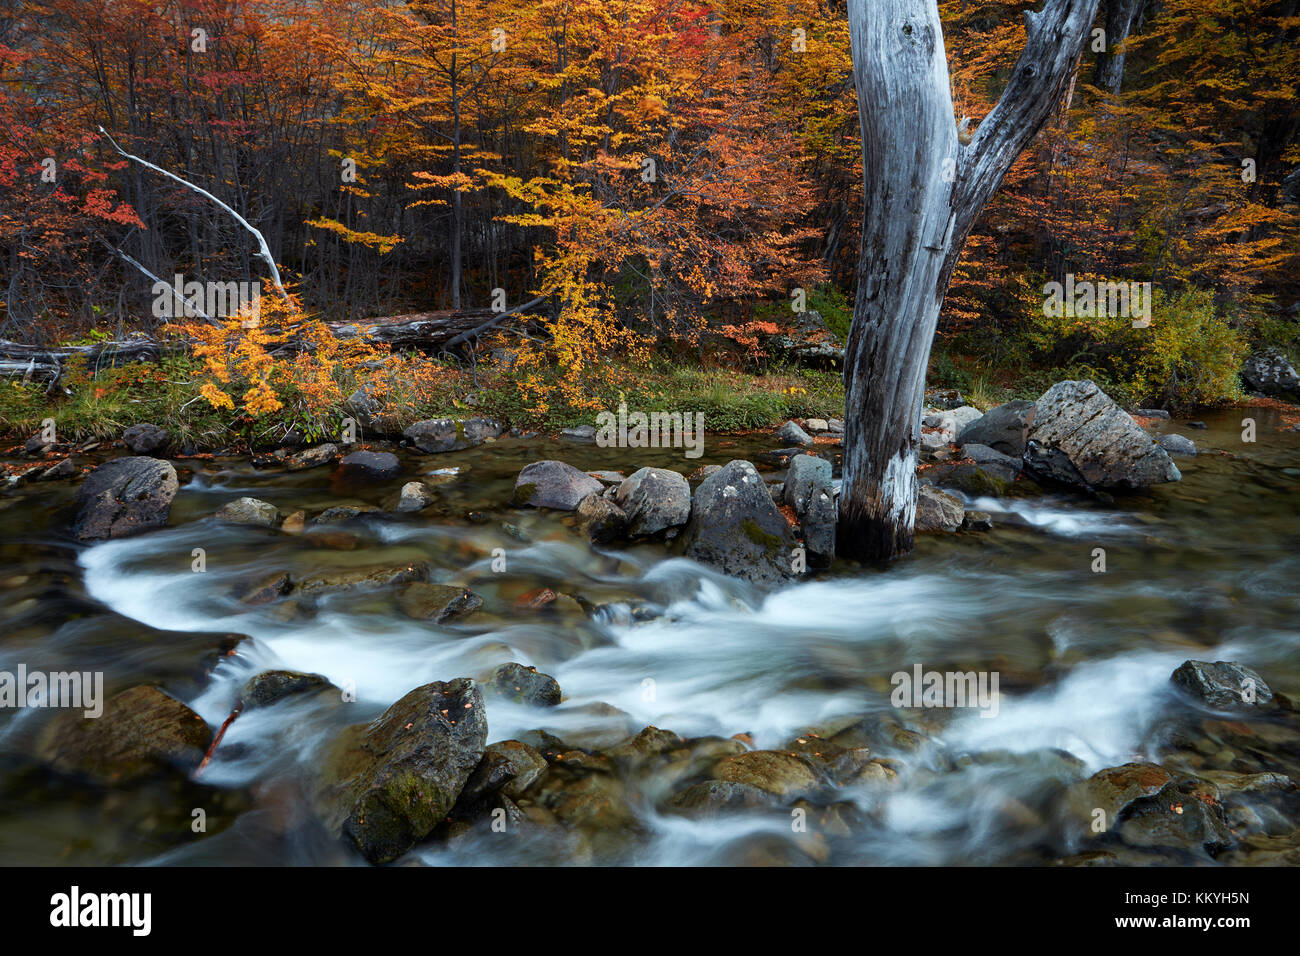 Stream and lenga trees in autumn, near El Chalten, Parque Nacional Los Glaciares, Patagonia, Argentina, South America (MR) Stock Photo